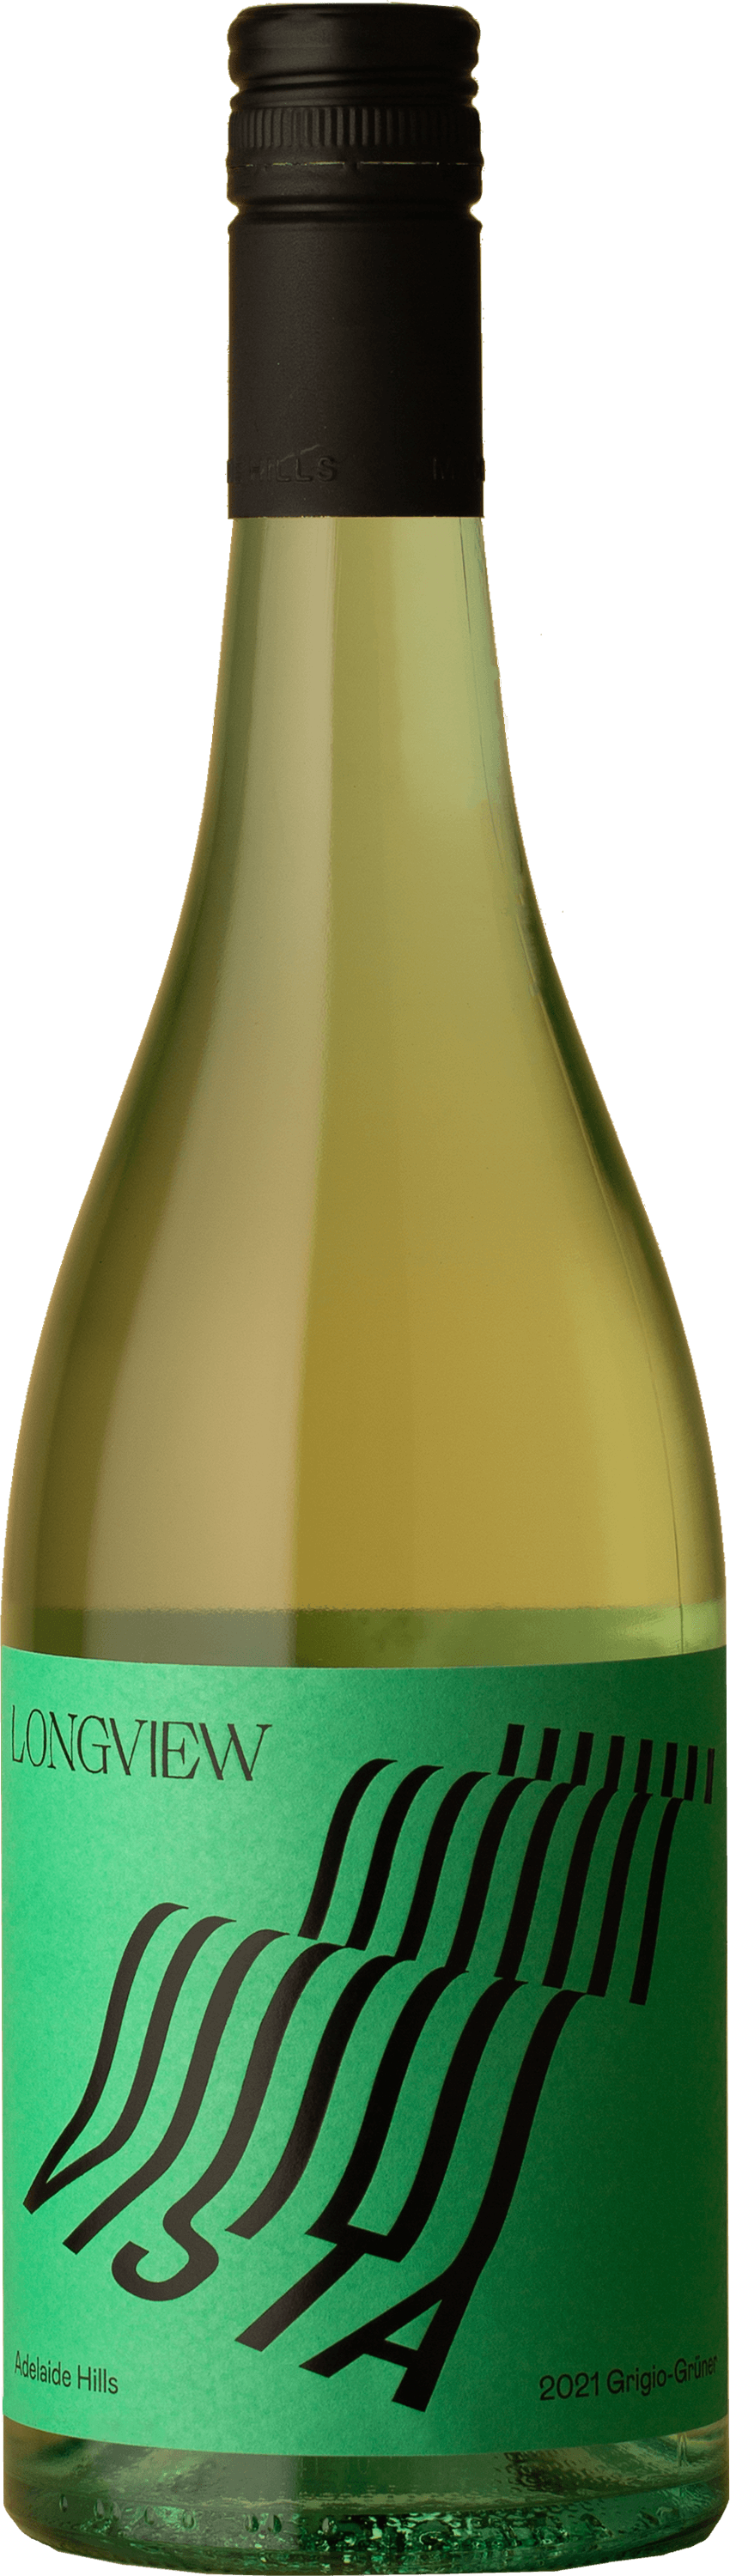 Longview - Vista Grigio Grüner White Blend 2021 White Wine